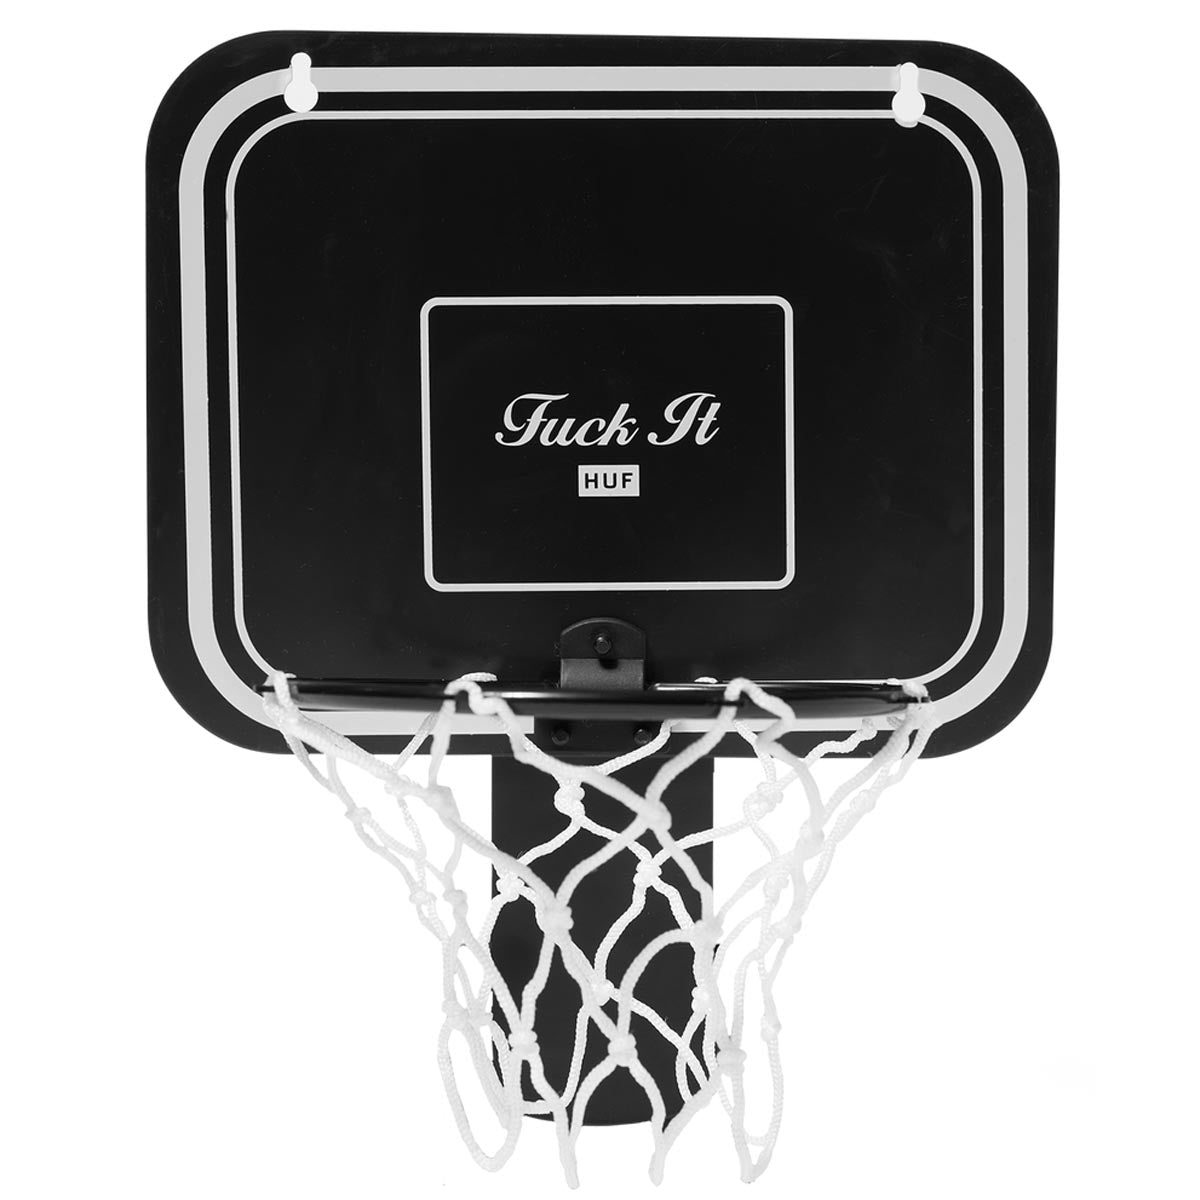 HUF Fuck It Waste Basket Hoop - Black image 1